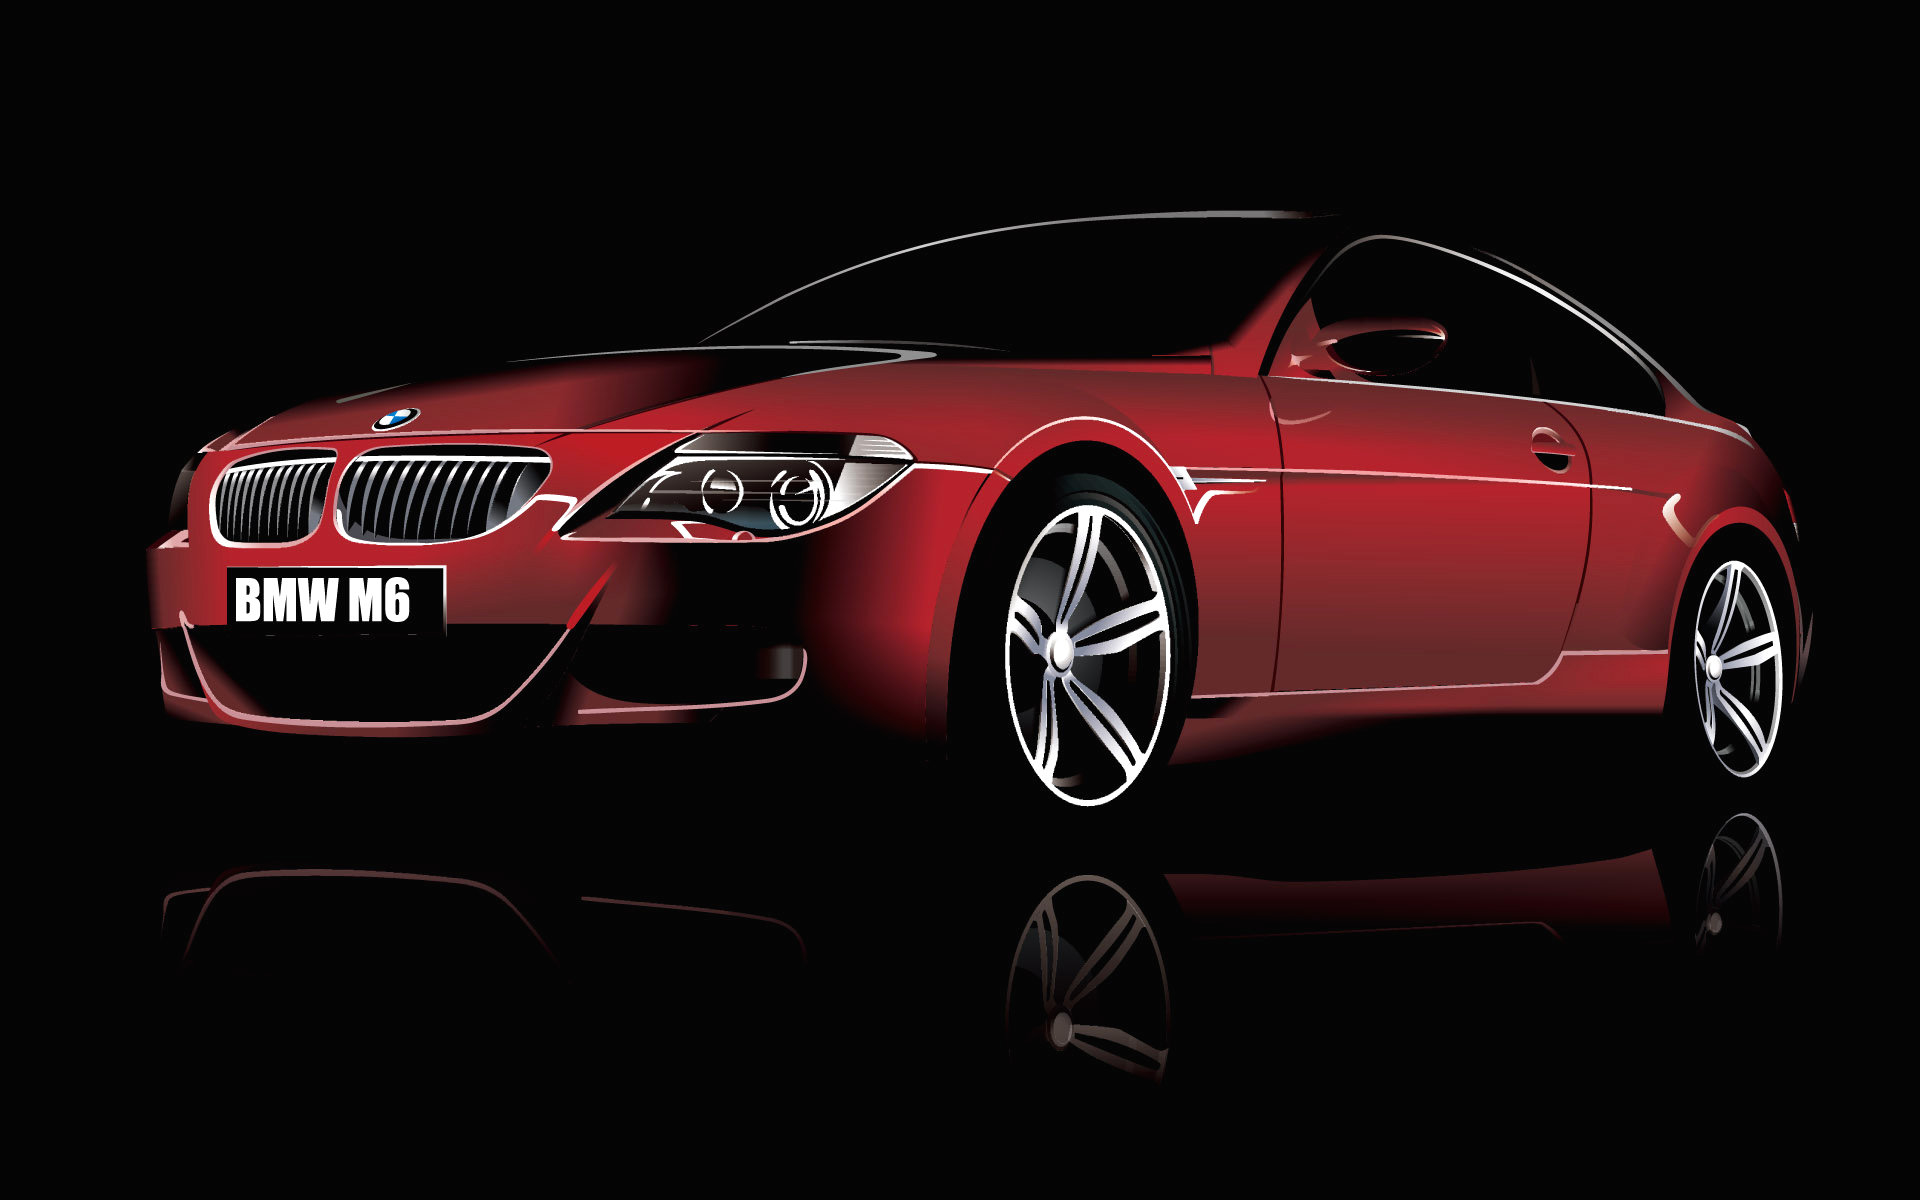 High resolution BMW M6 hd 1920x1200 background ID:27404 for desktop